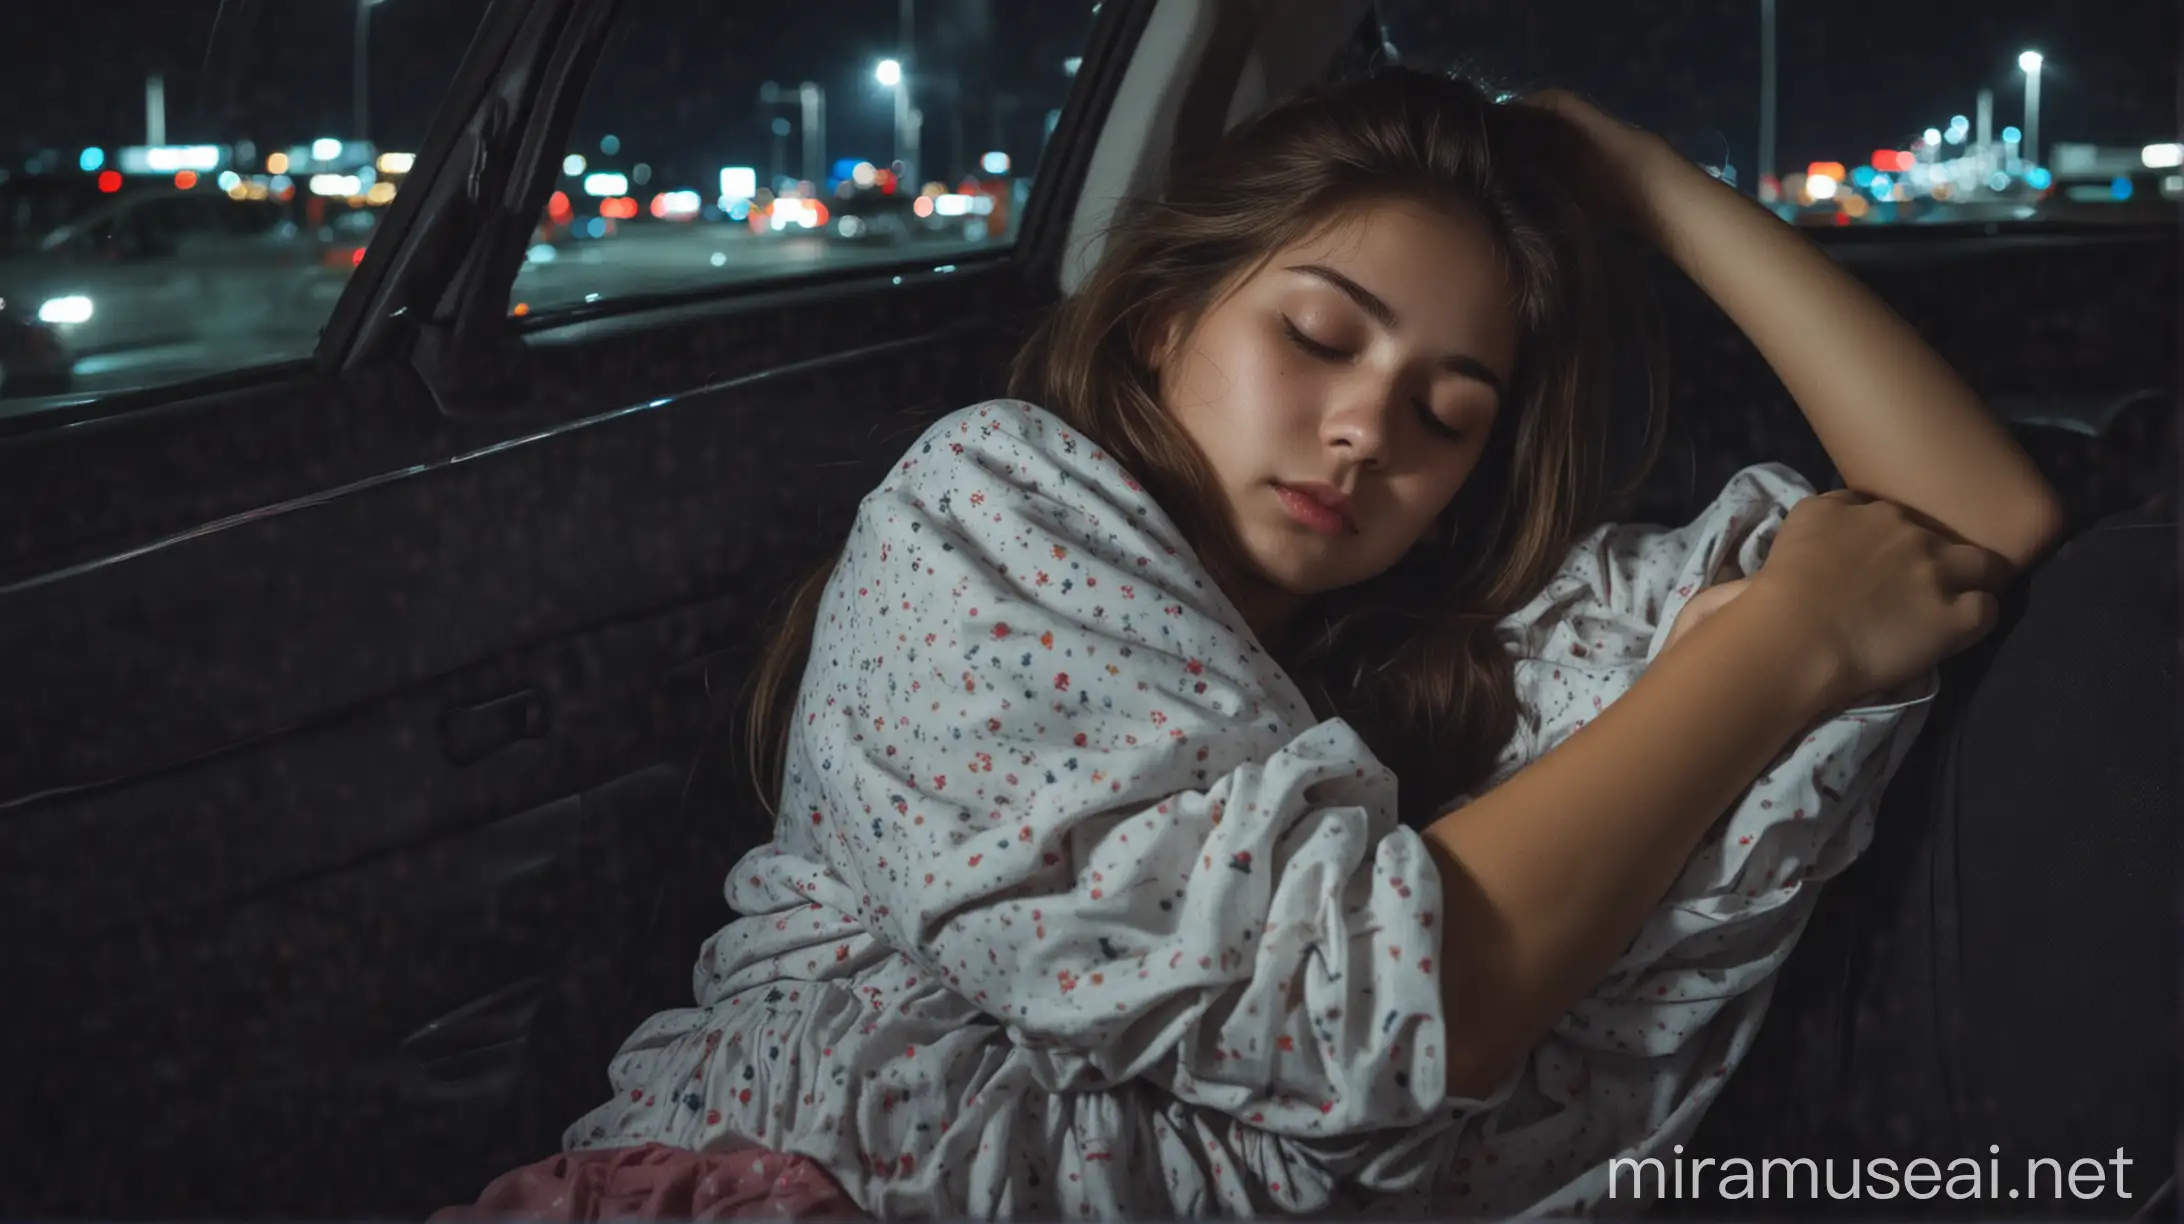 Girl Sleeping in Car at Night